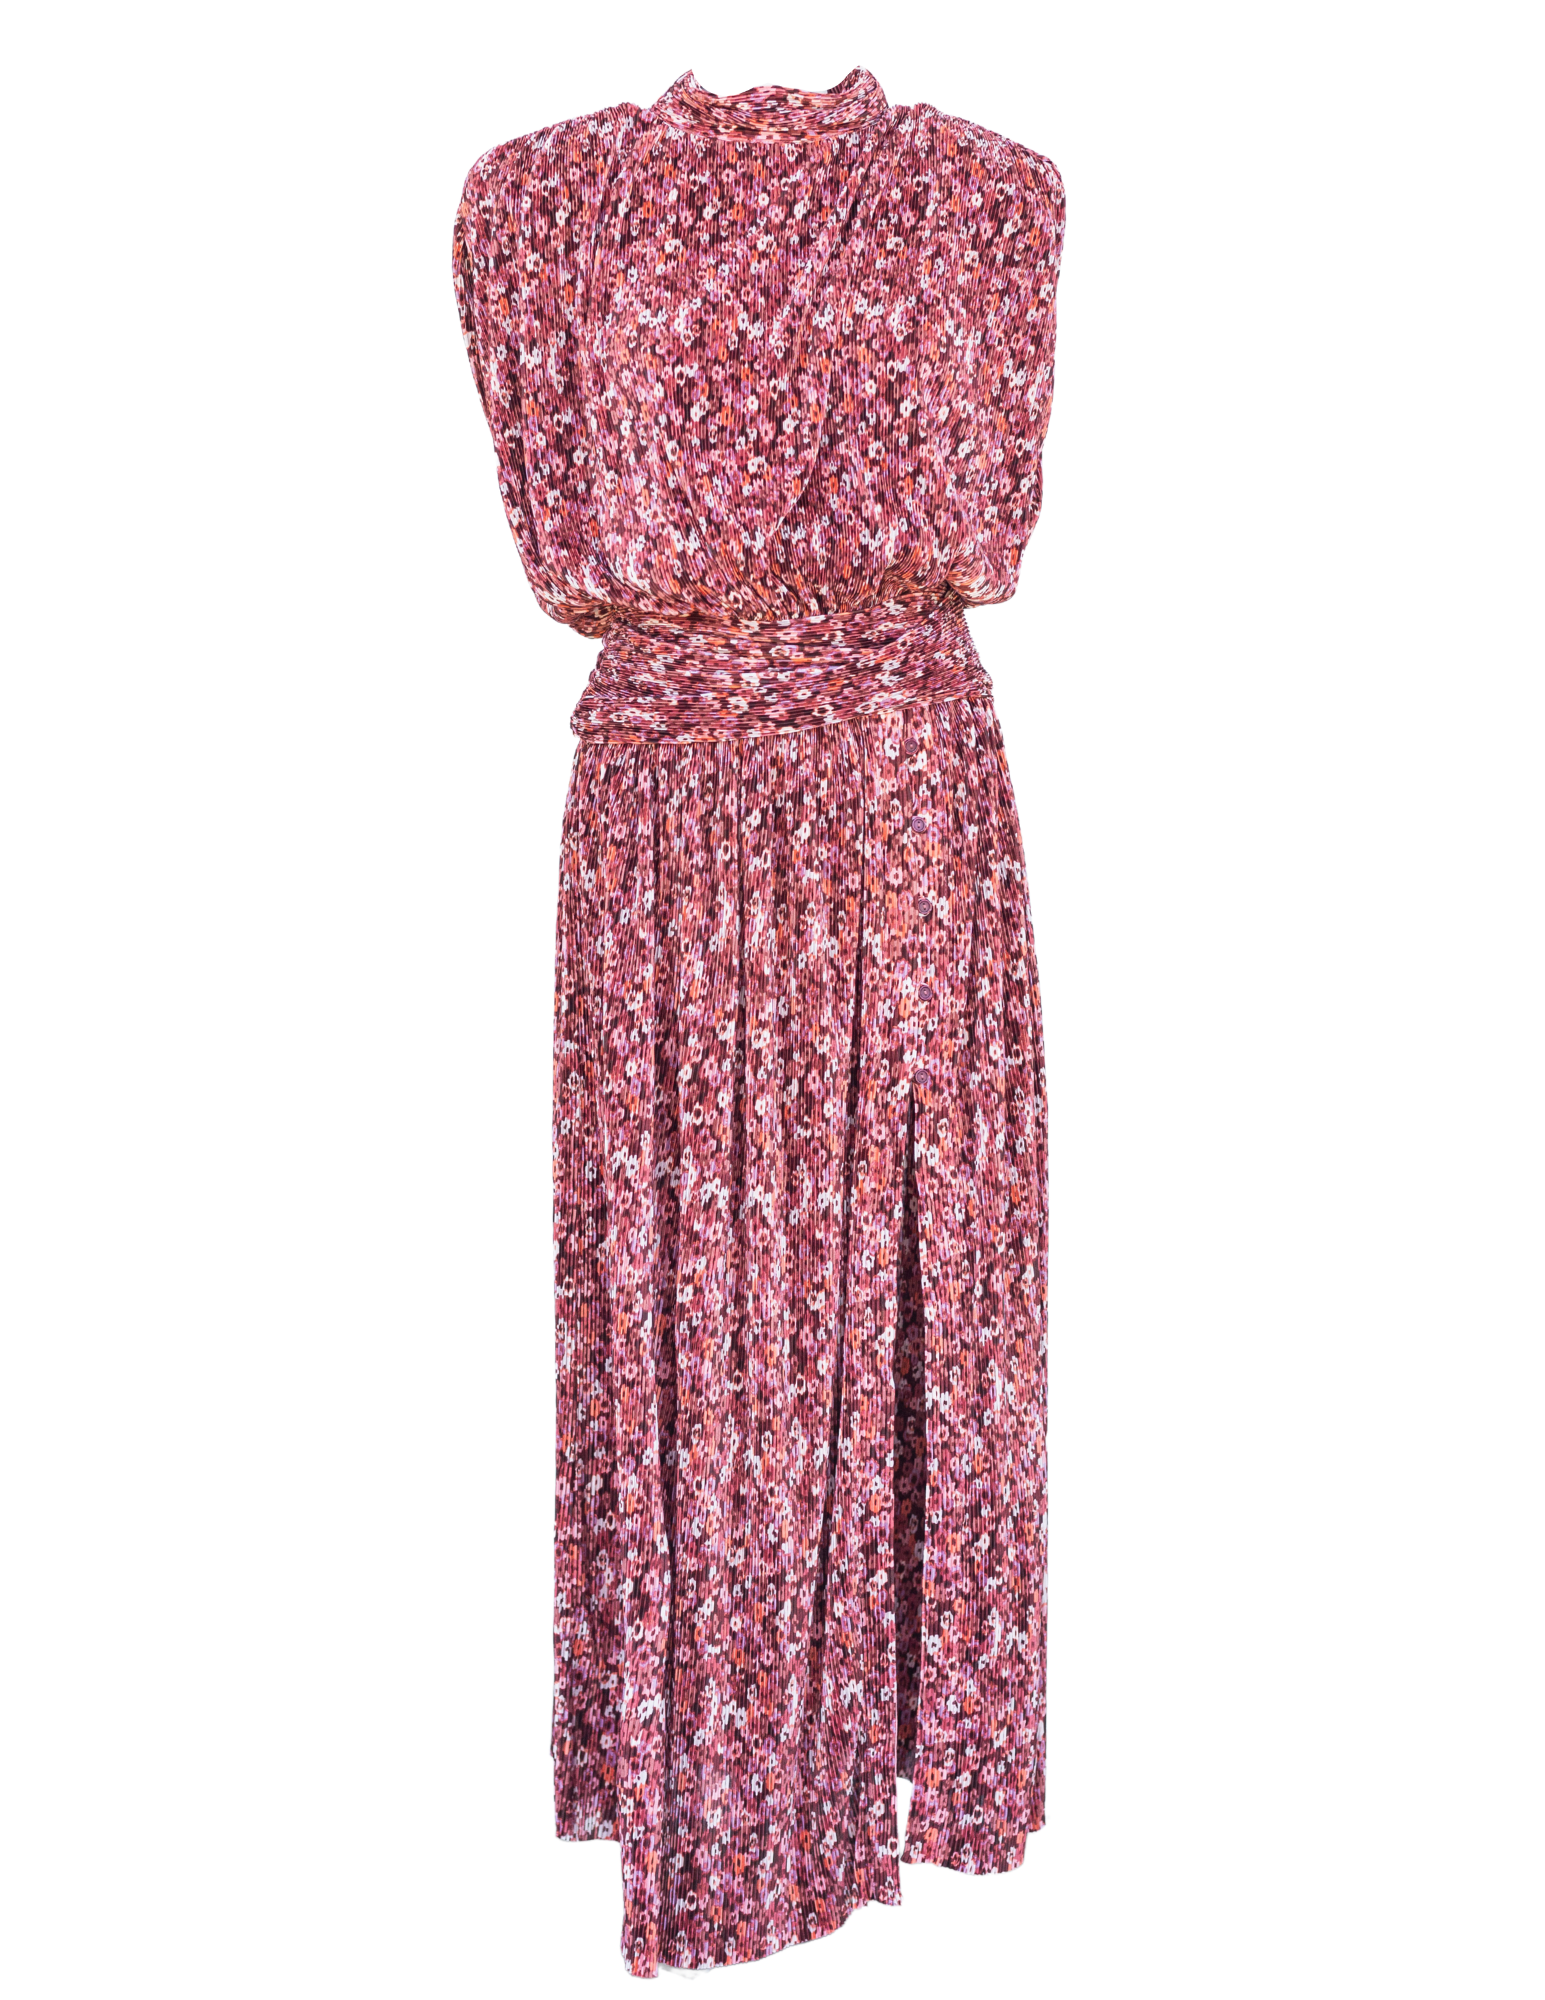 Solange Dress - Ruby Print